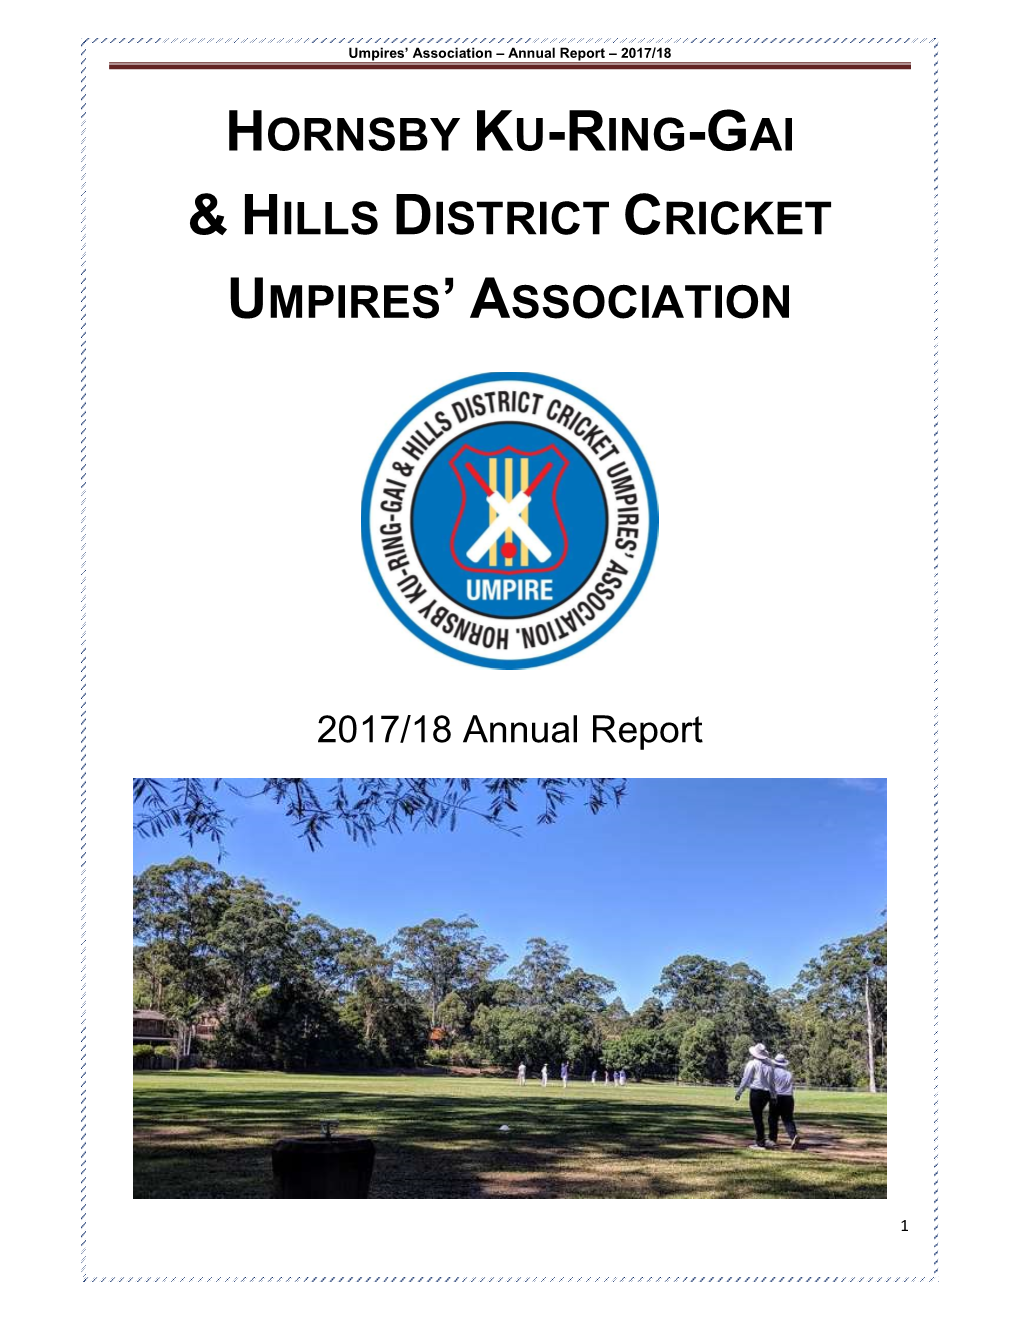 Hornsby Ku-Ring-Gai & Hills District Cricket Umpires